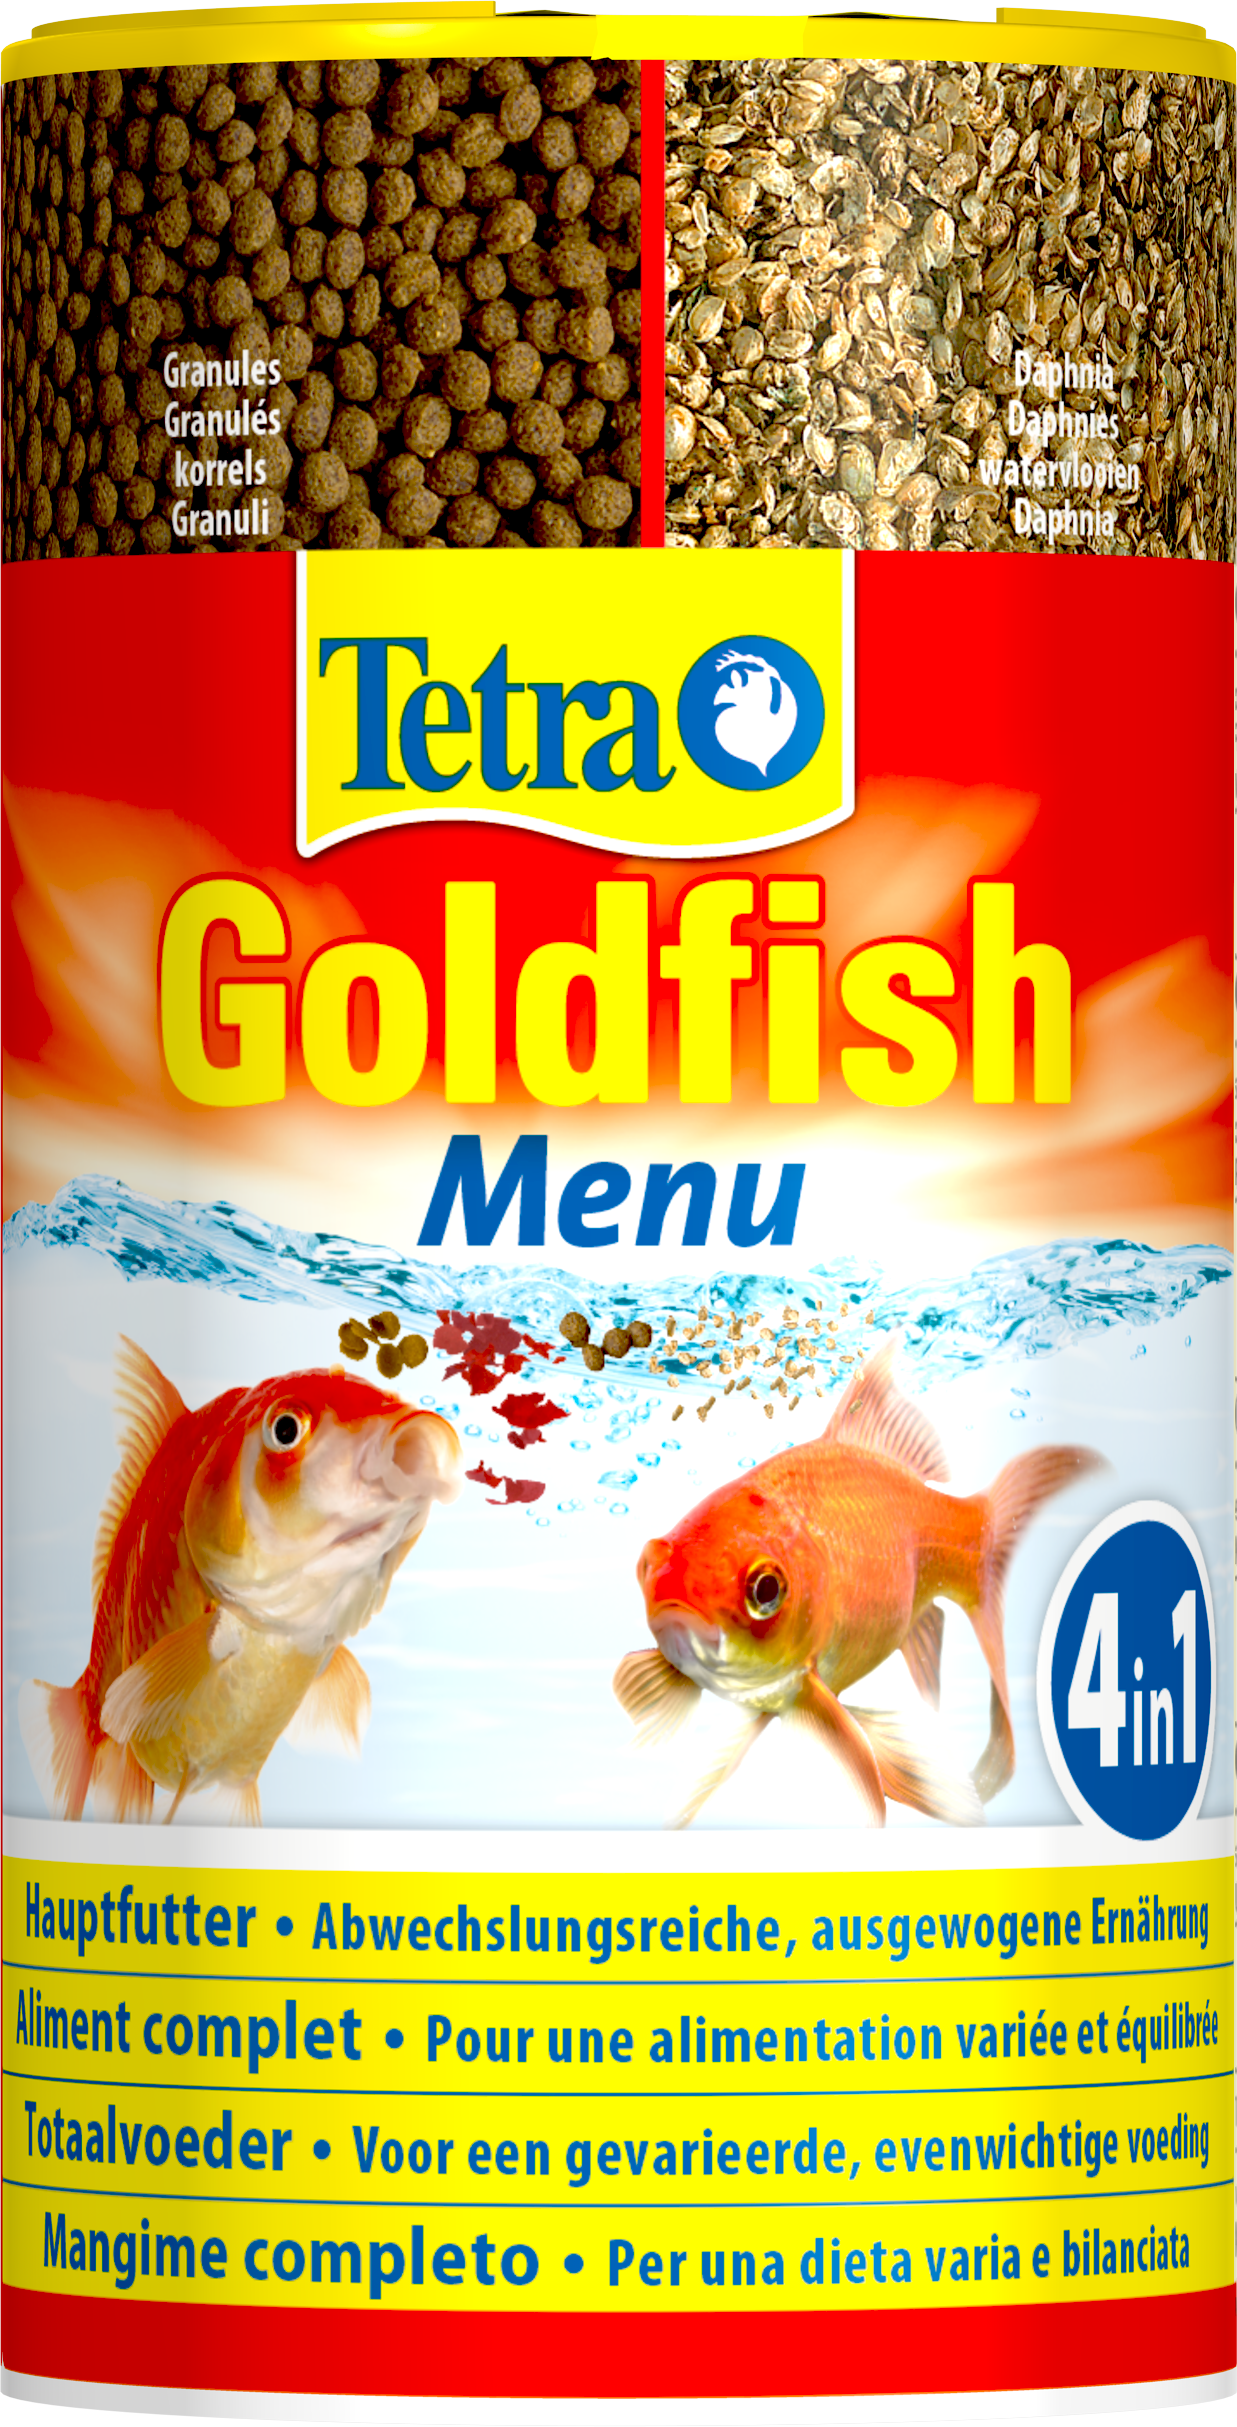 Tetra Goldfish Menù